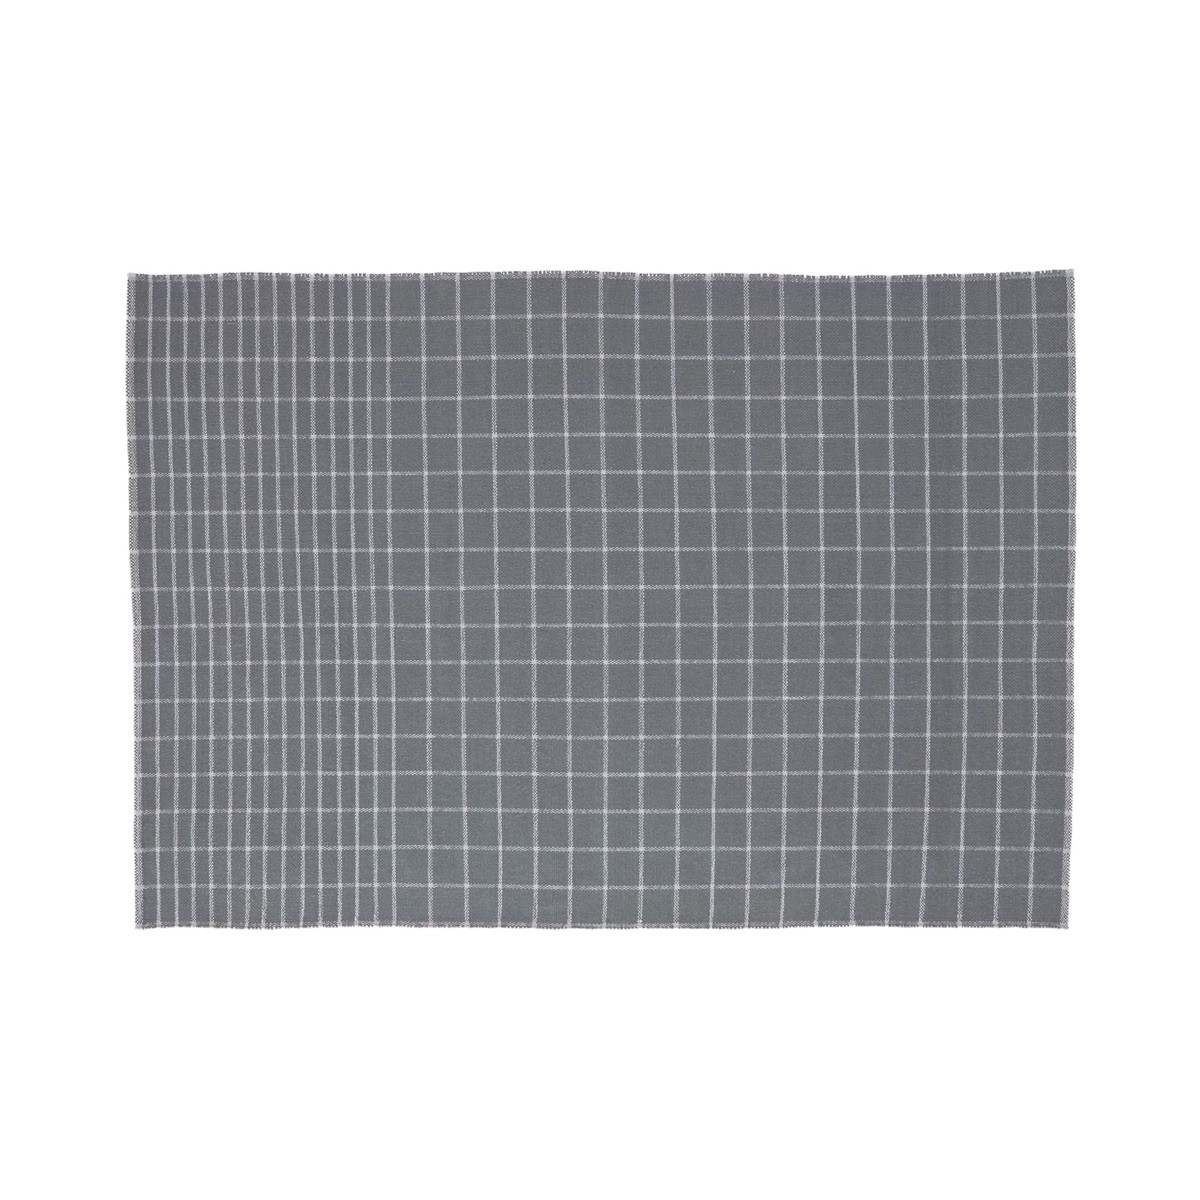 170x240cm - tapis Tiles 2